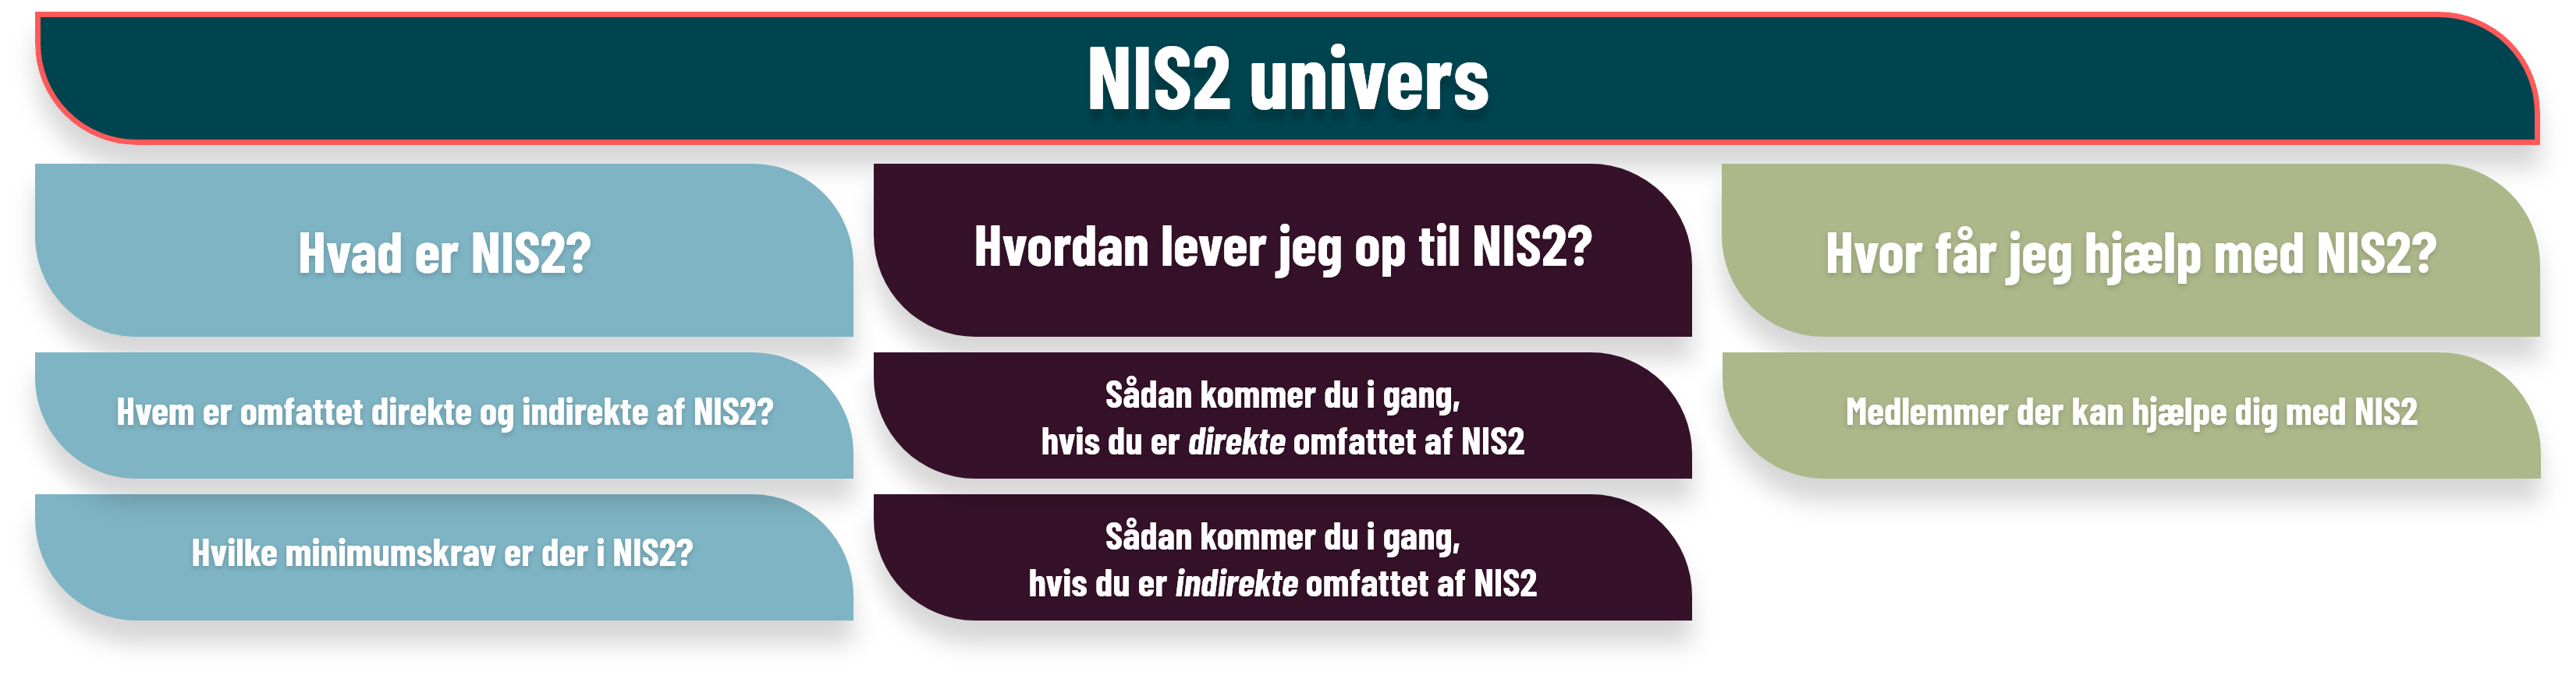 NIS2 univers